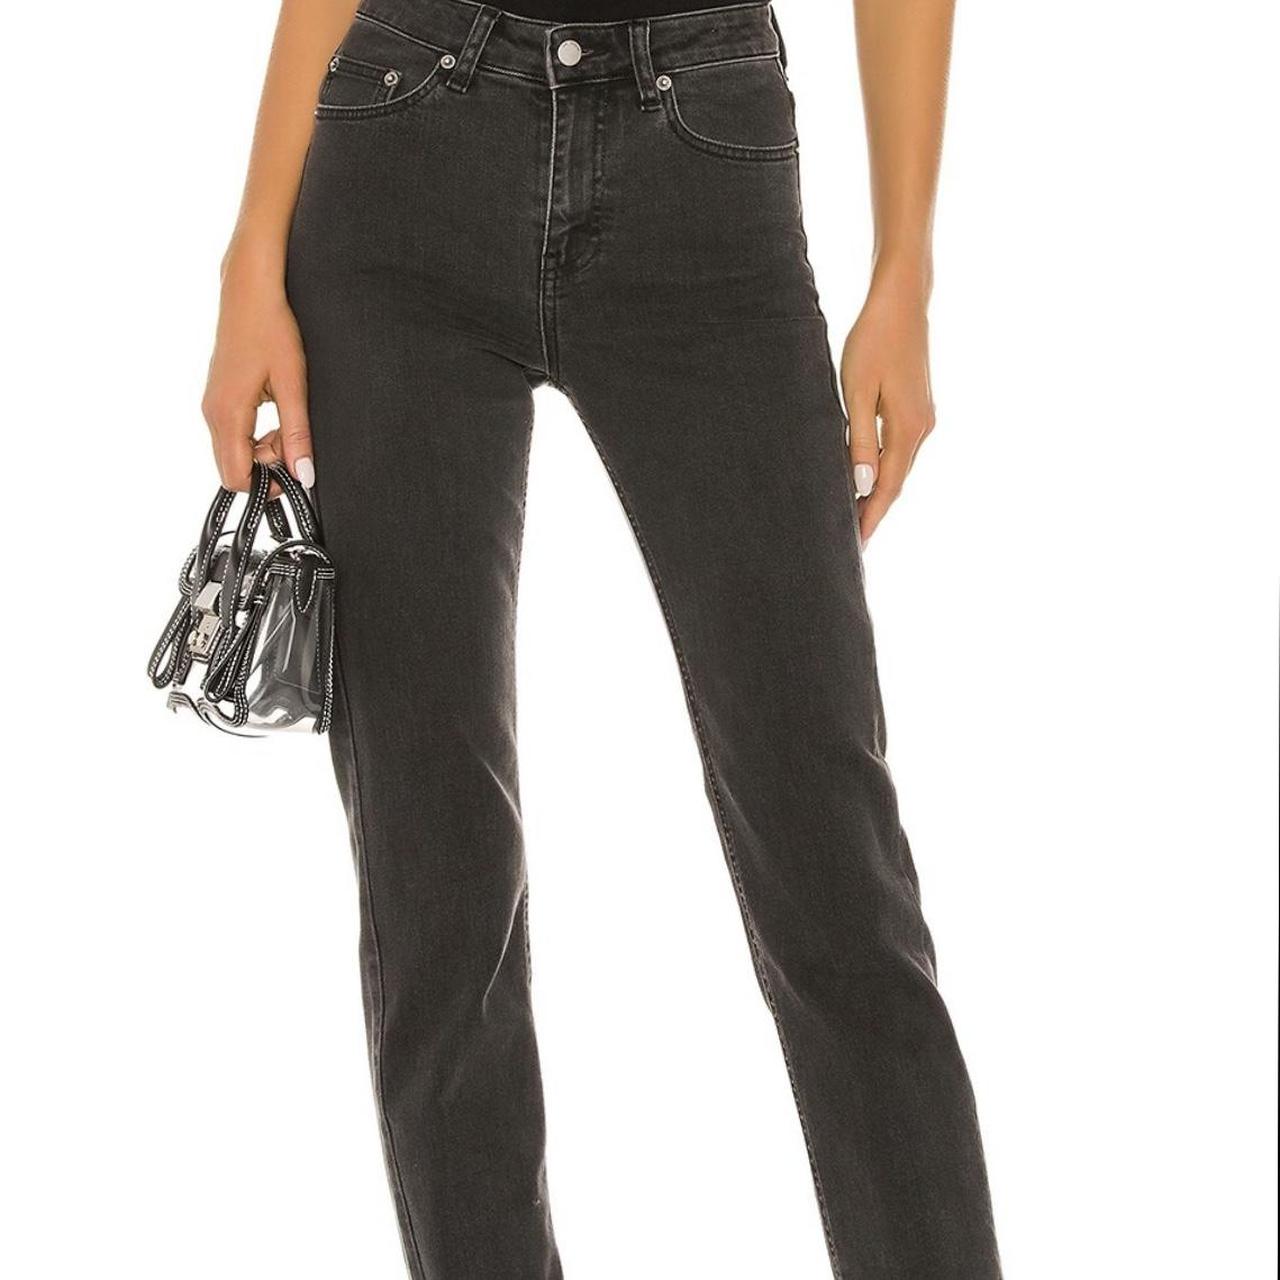 Dr. Denim Women's Black Jeans (2)